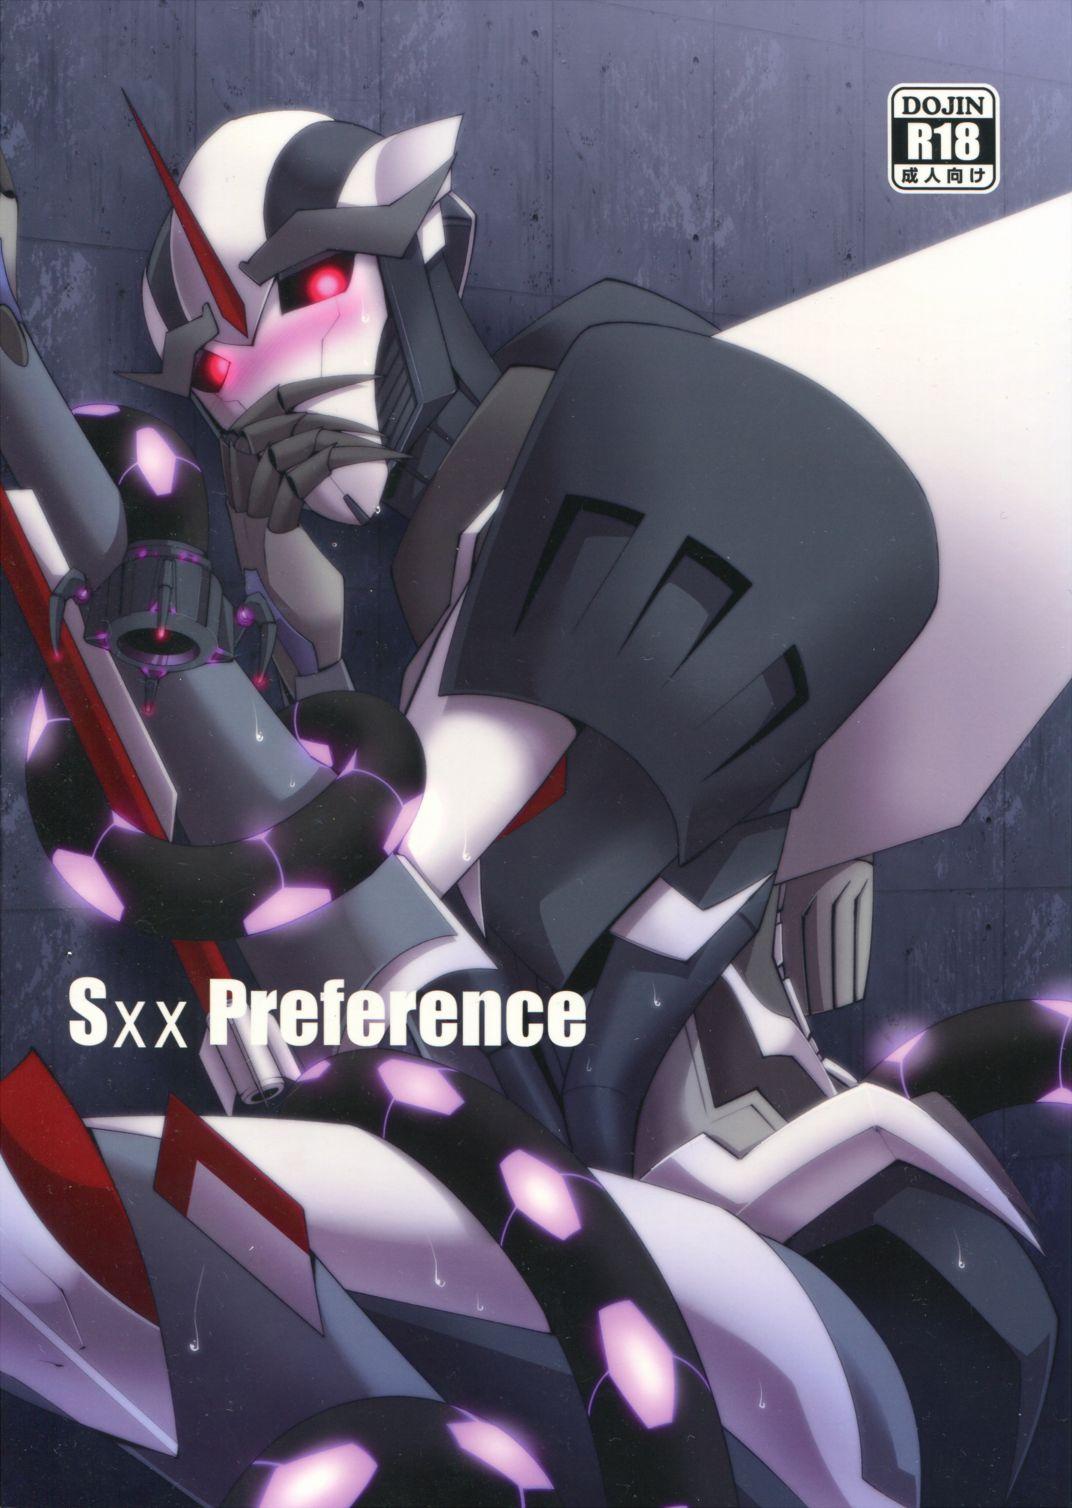 American Sxx Preference - Transformers Chudai - Picture 1